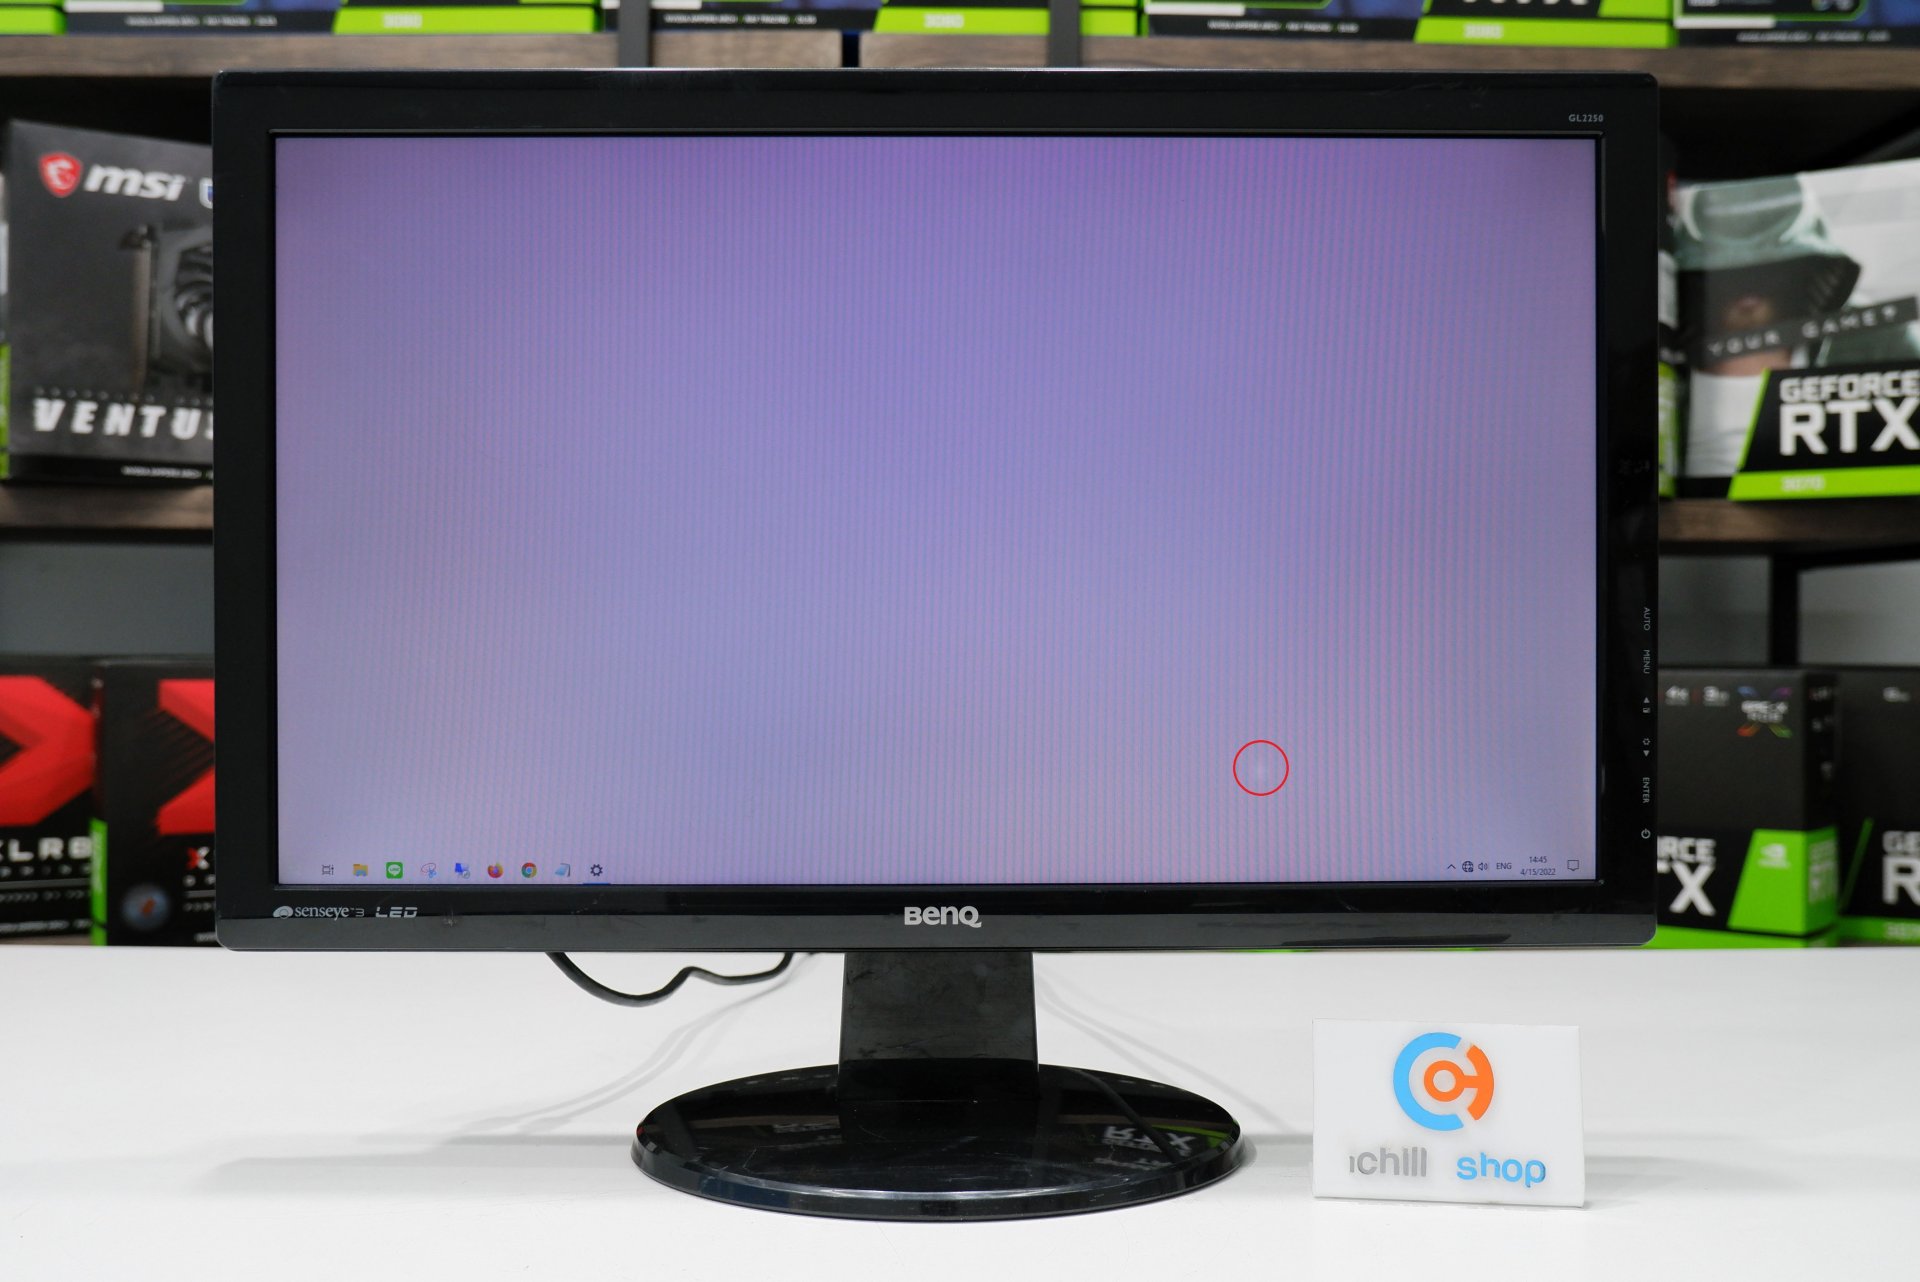 BenQ GL GL2250 21.5 Widescreen LED LCD Monitor DVI VGA Full HD